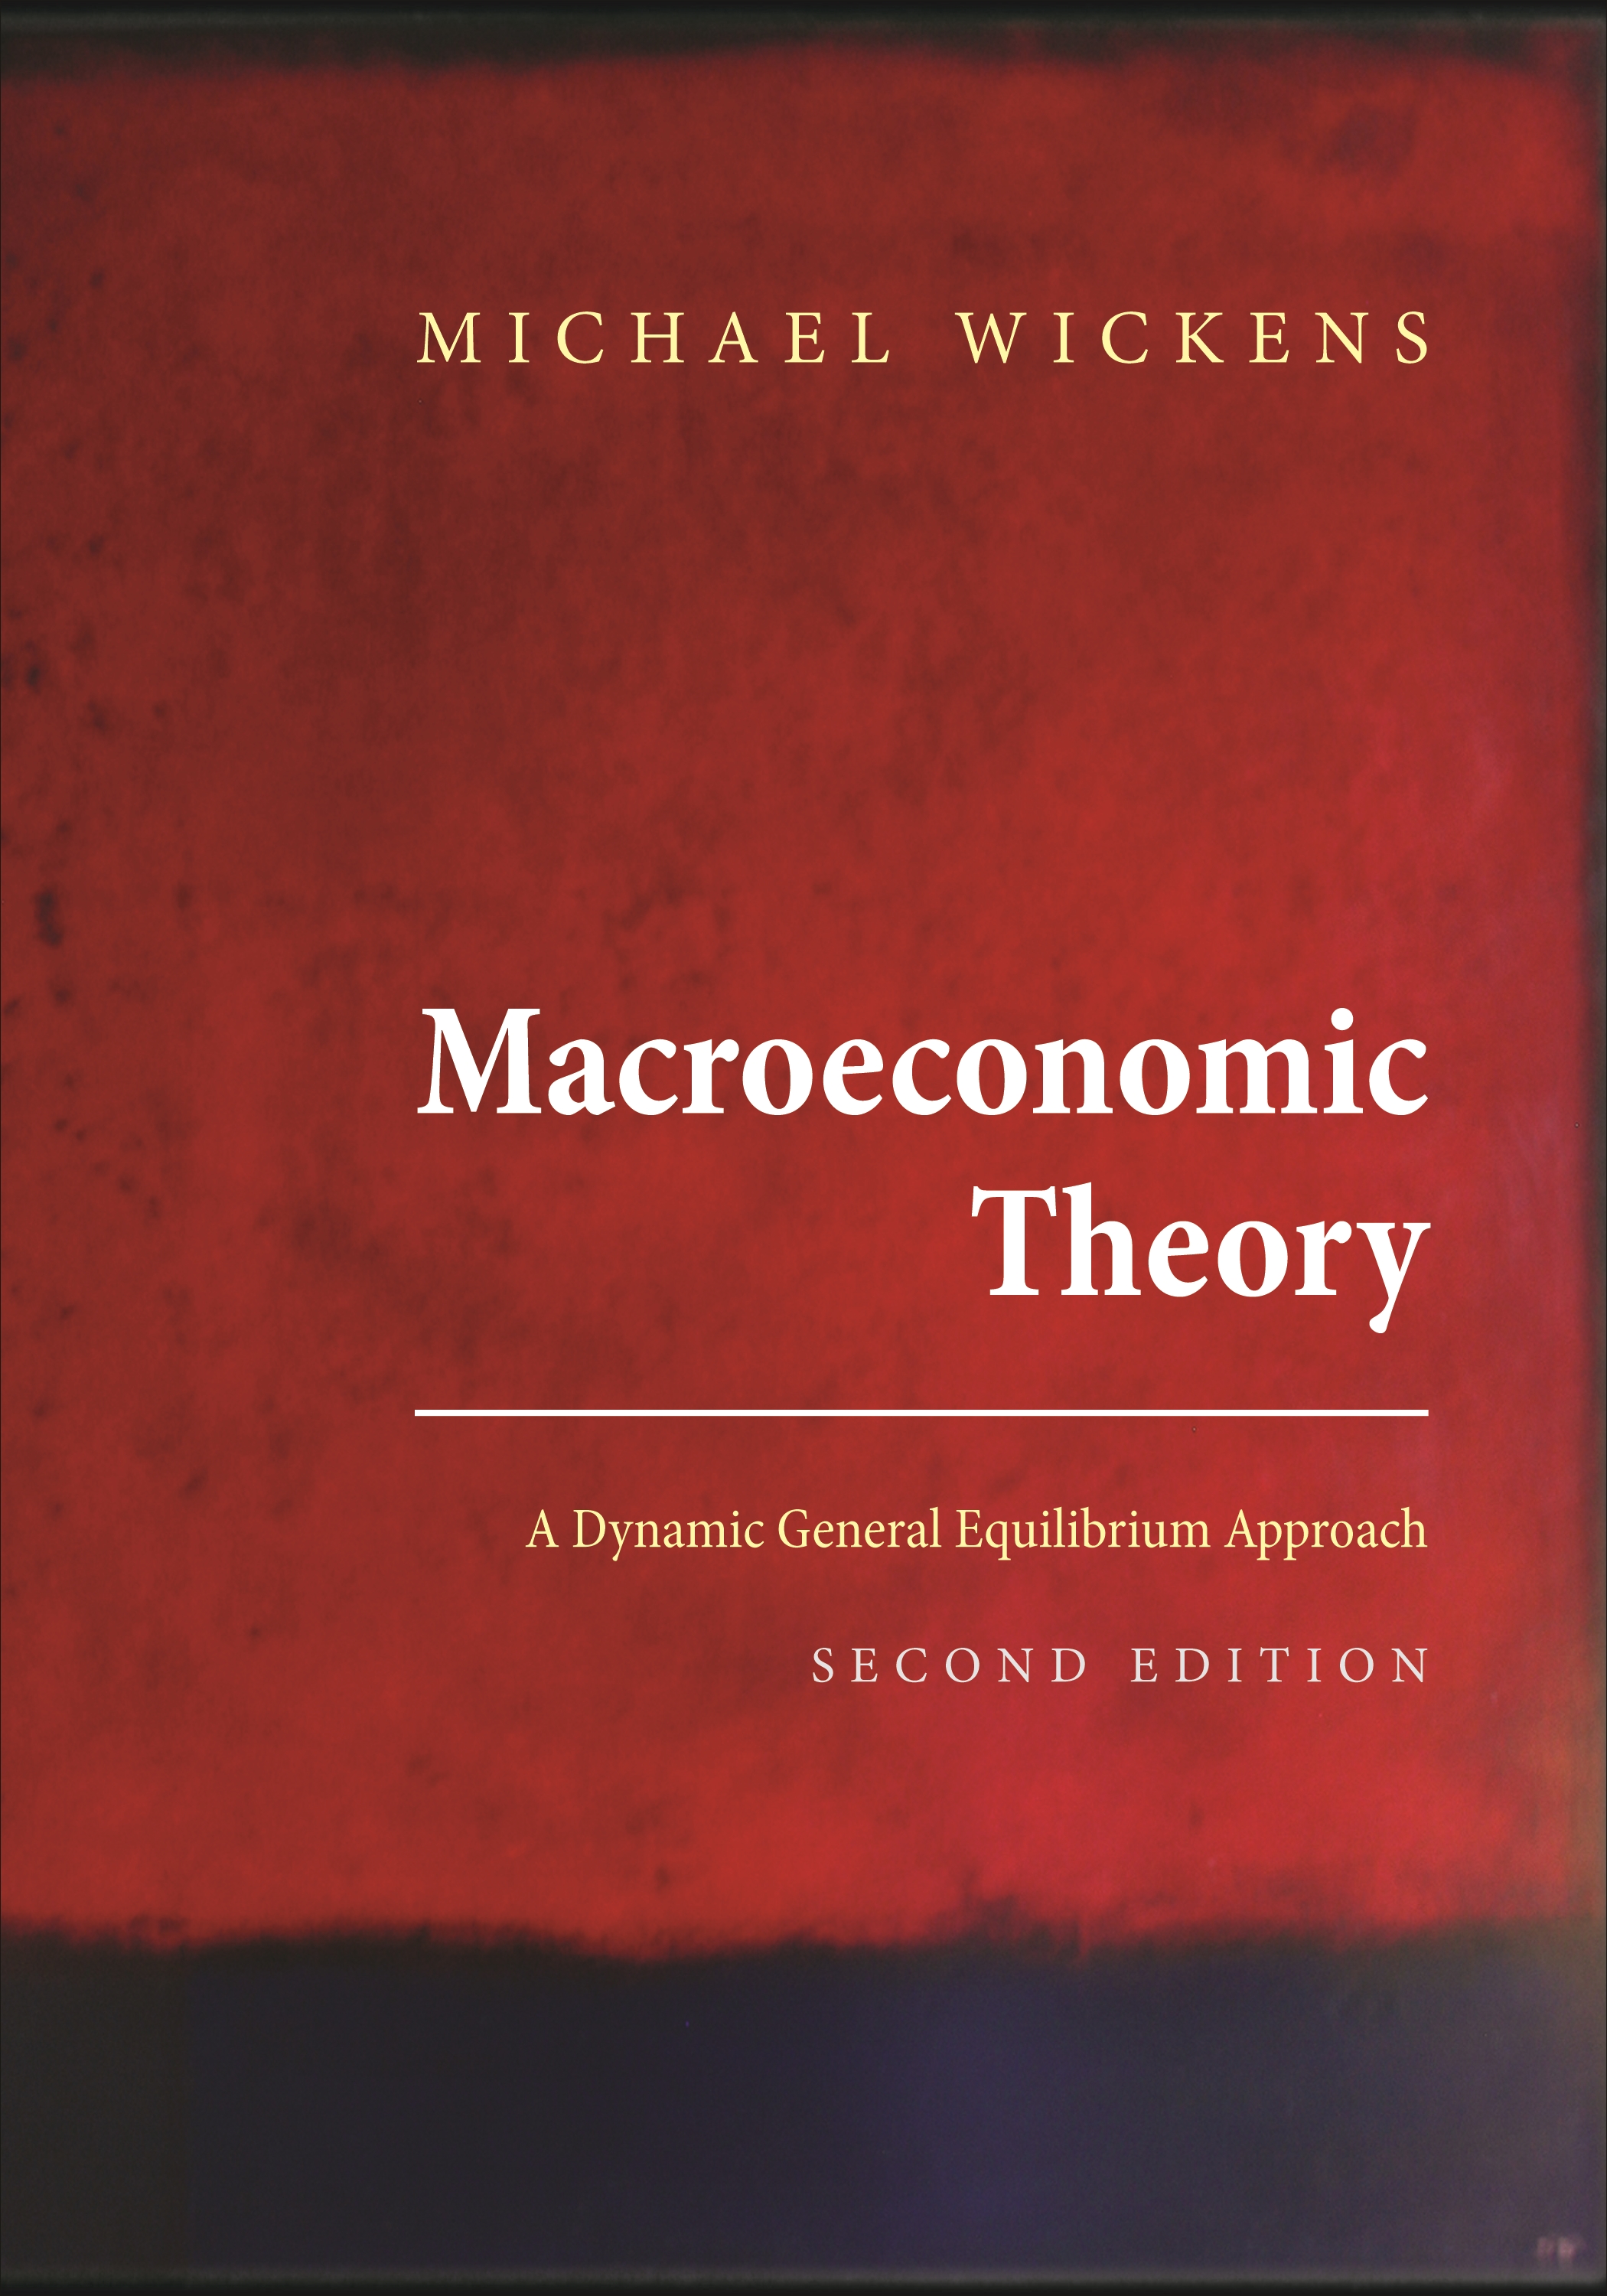 Macroeconomic Theory